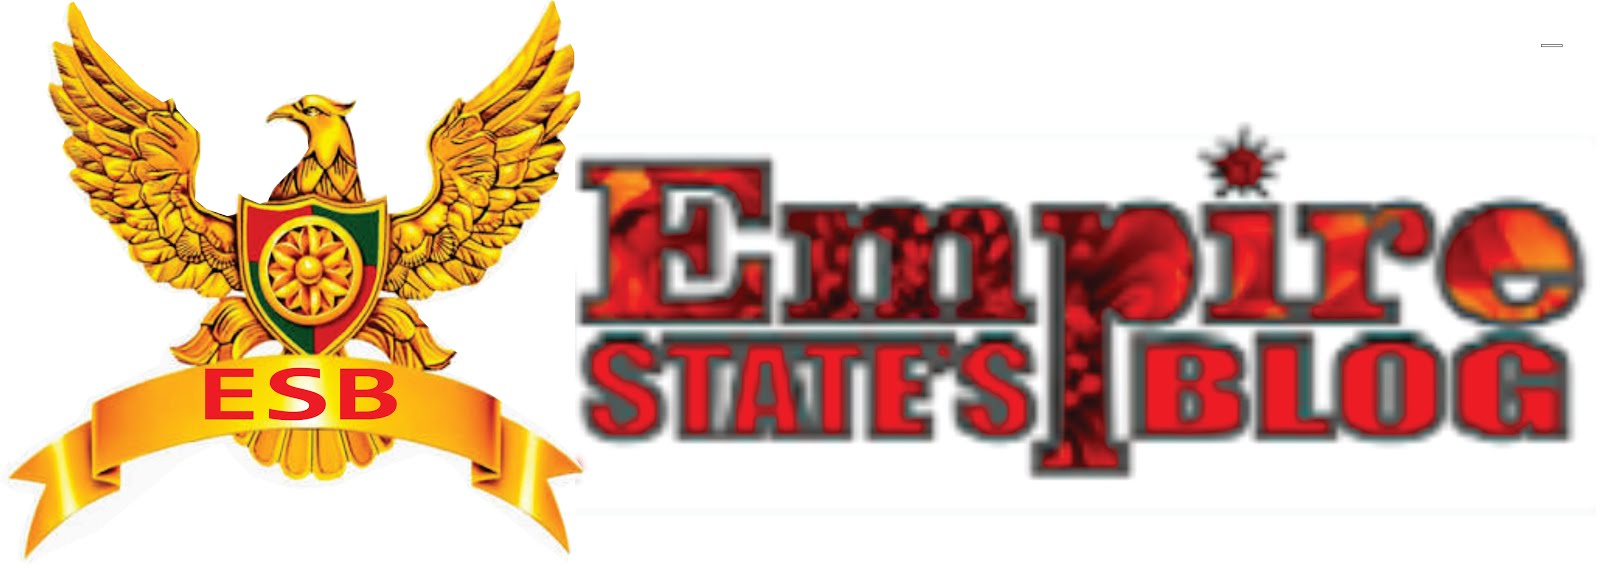 Empire States Blog